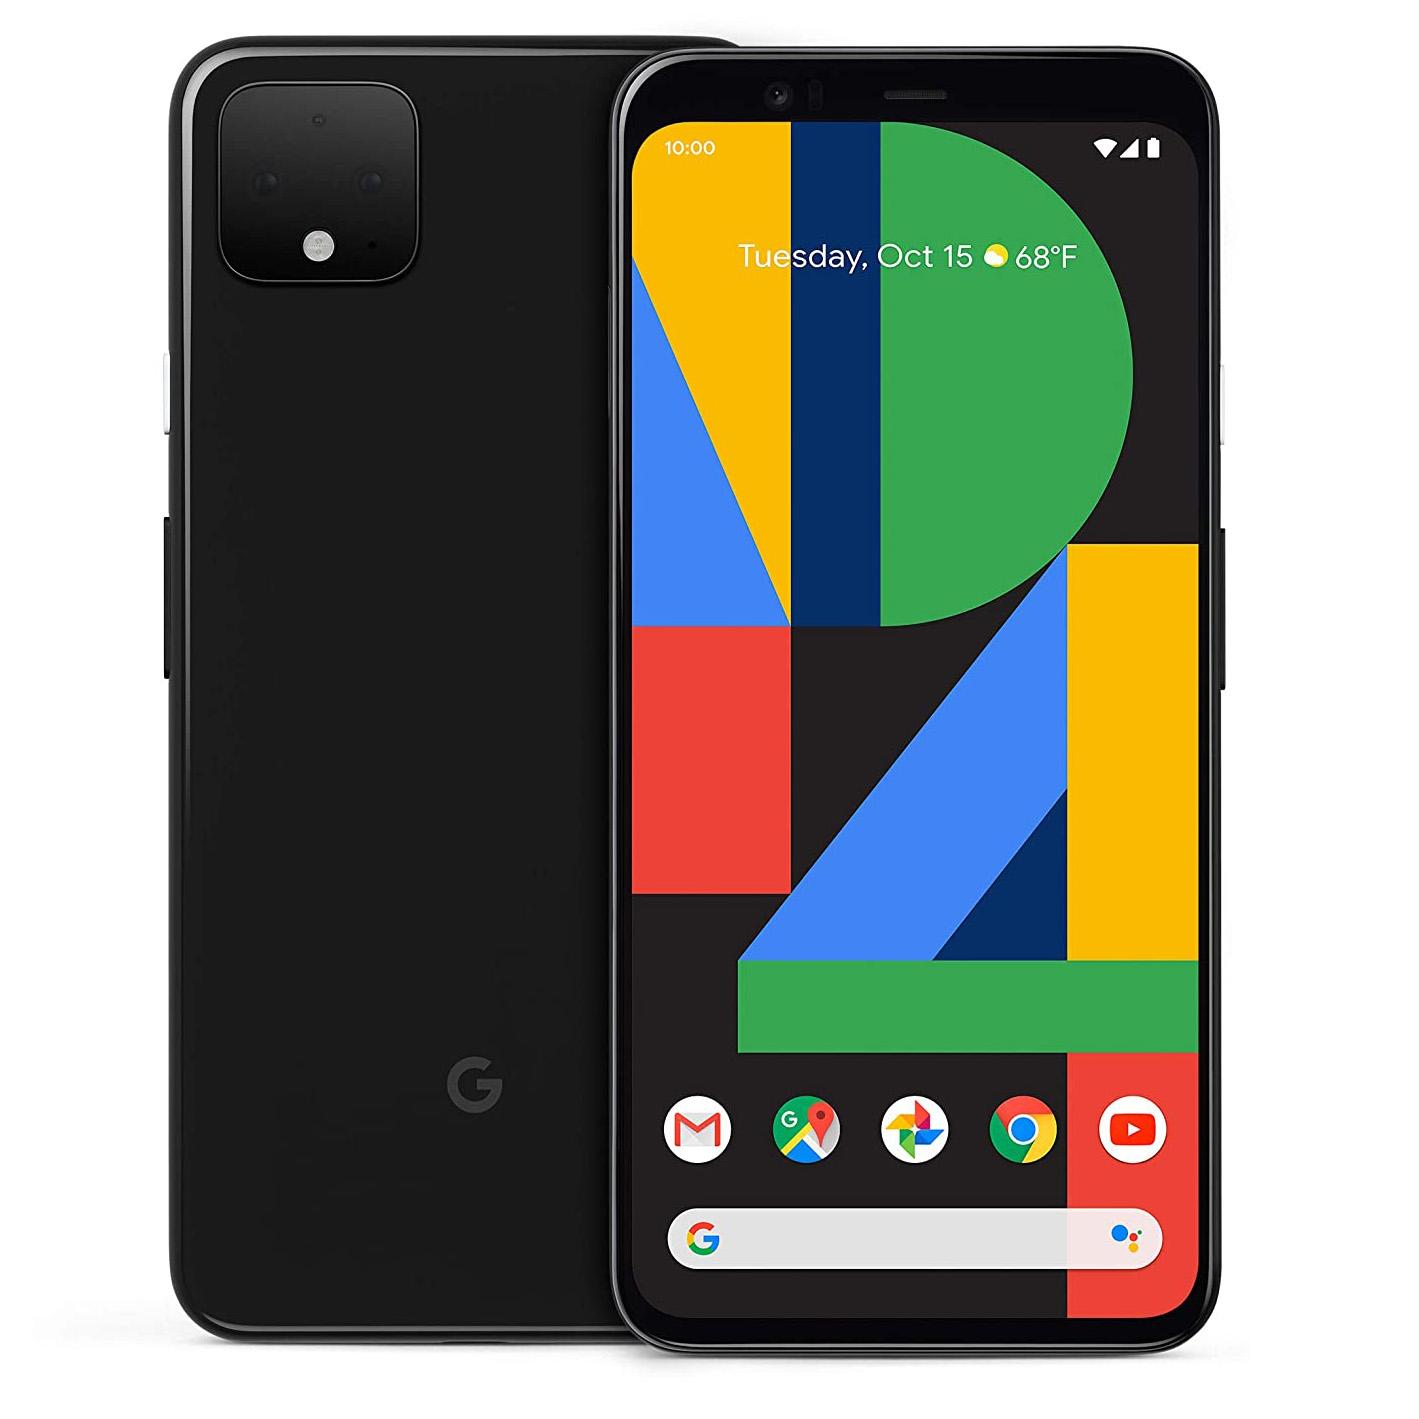 Google Pixel 4 64GB Xfinity Smartphone for $299.99 Shipped